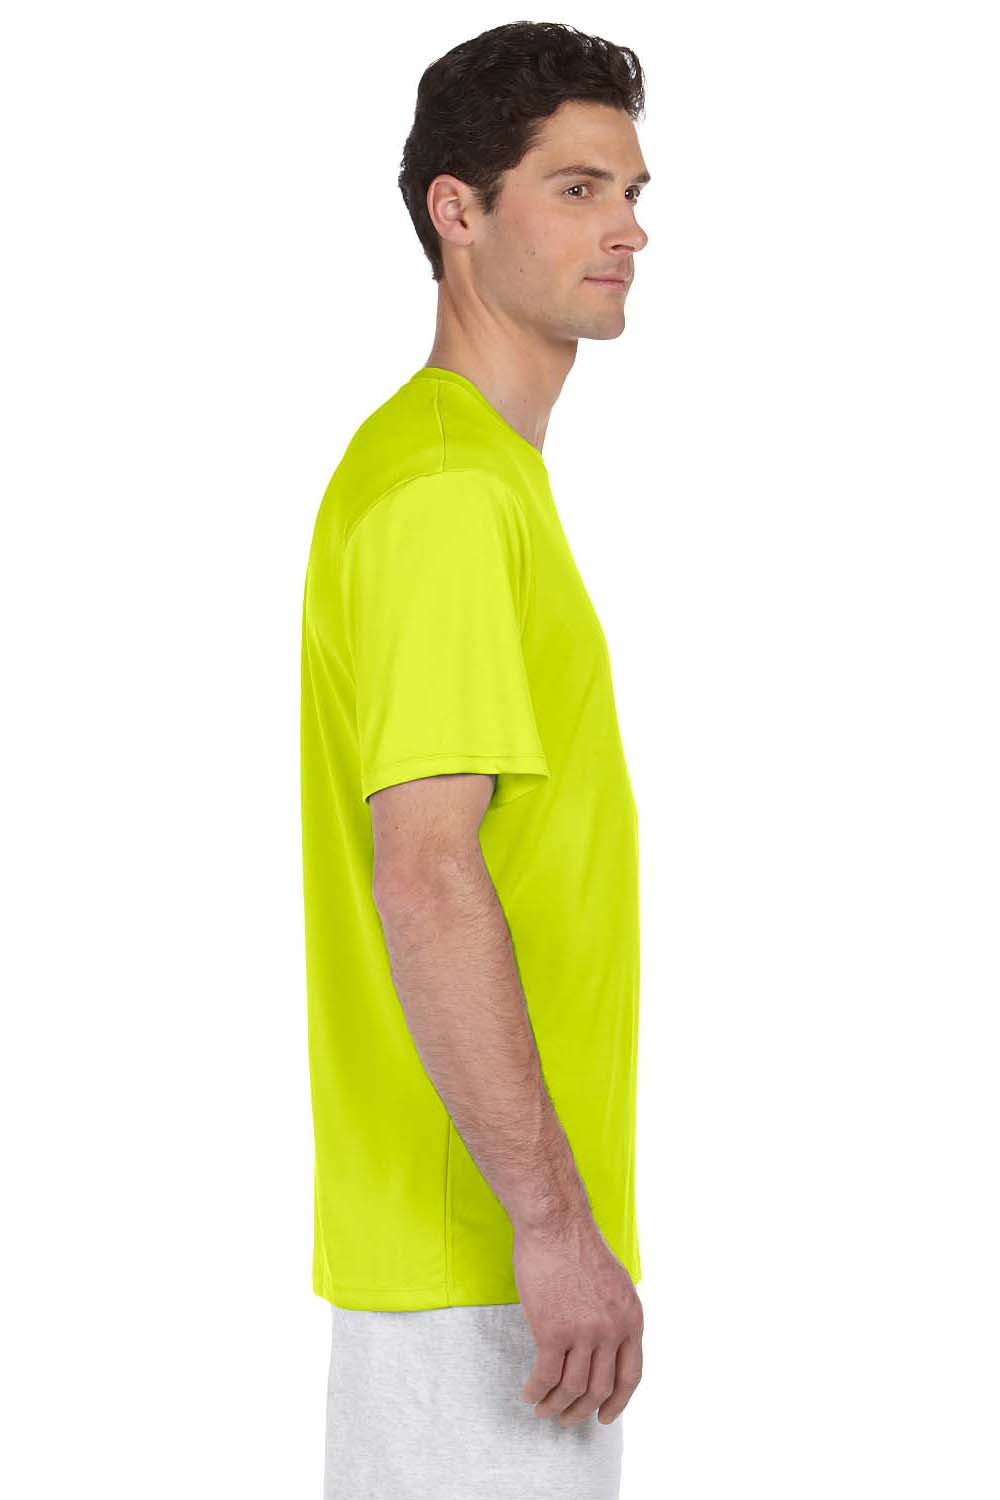 Hanes 4820 Mens Cool DRI FreshIQ Moisture Wicking Short Sleeve Crewneck T-Shirt Safety Green Side